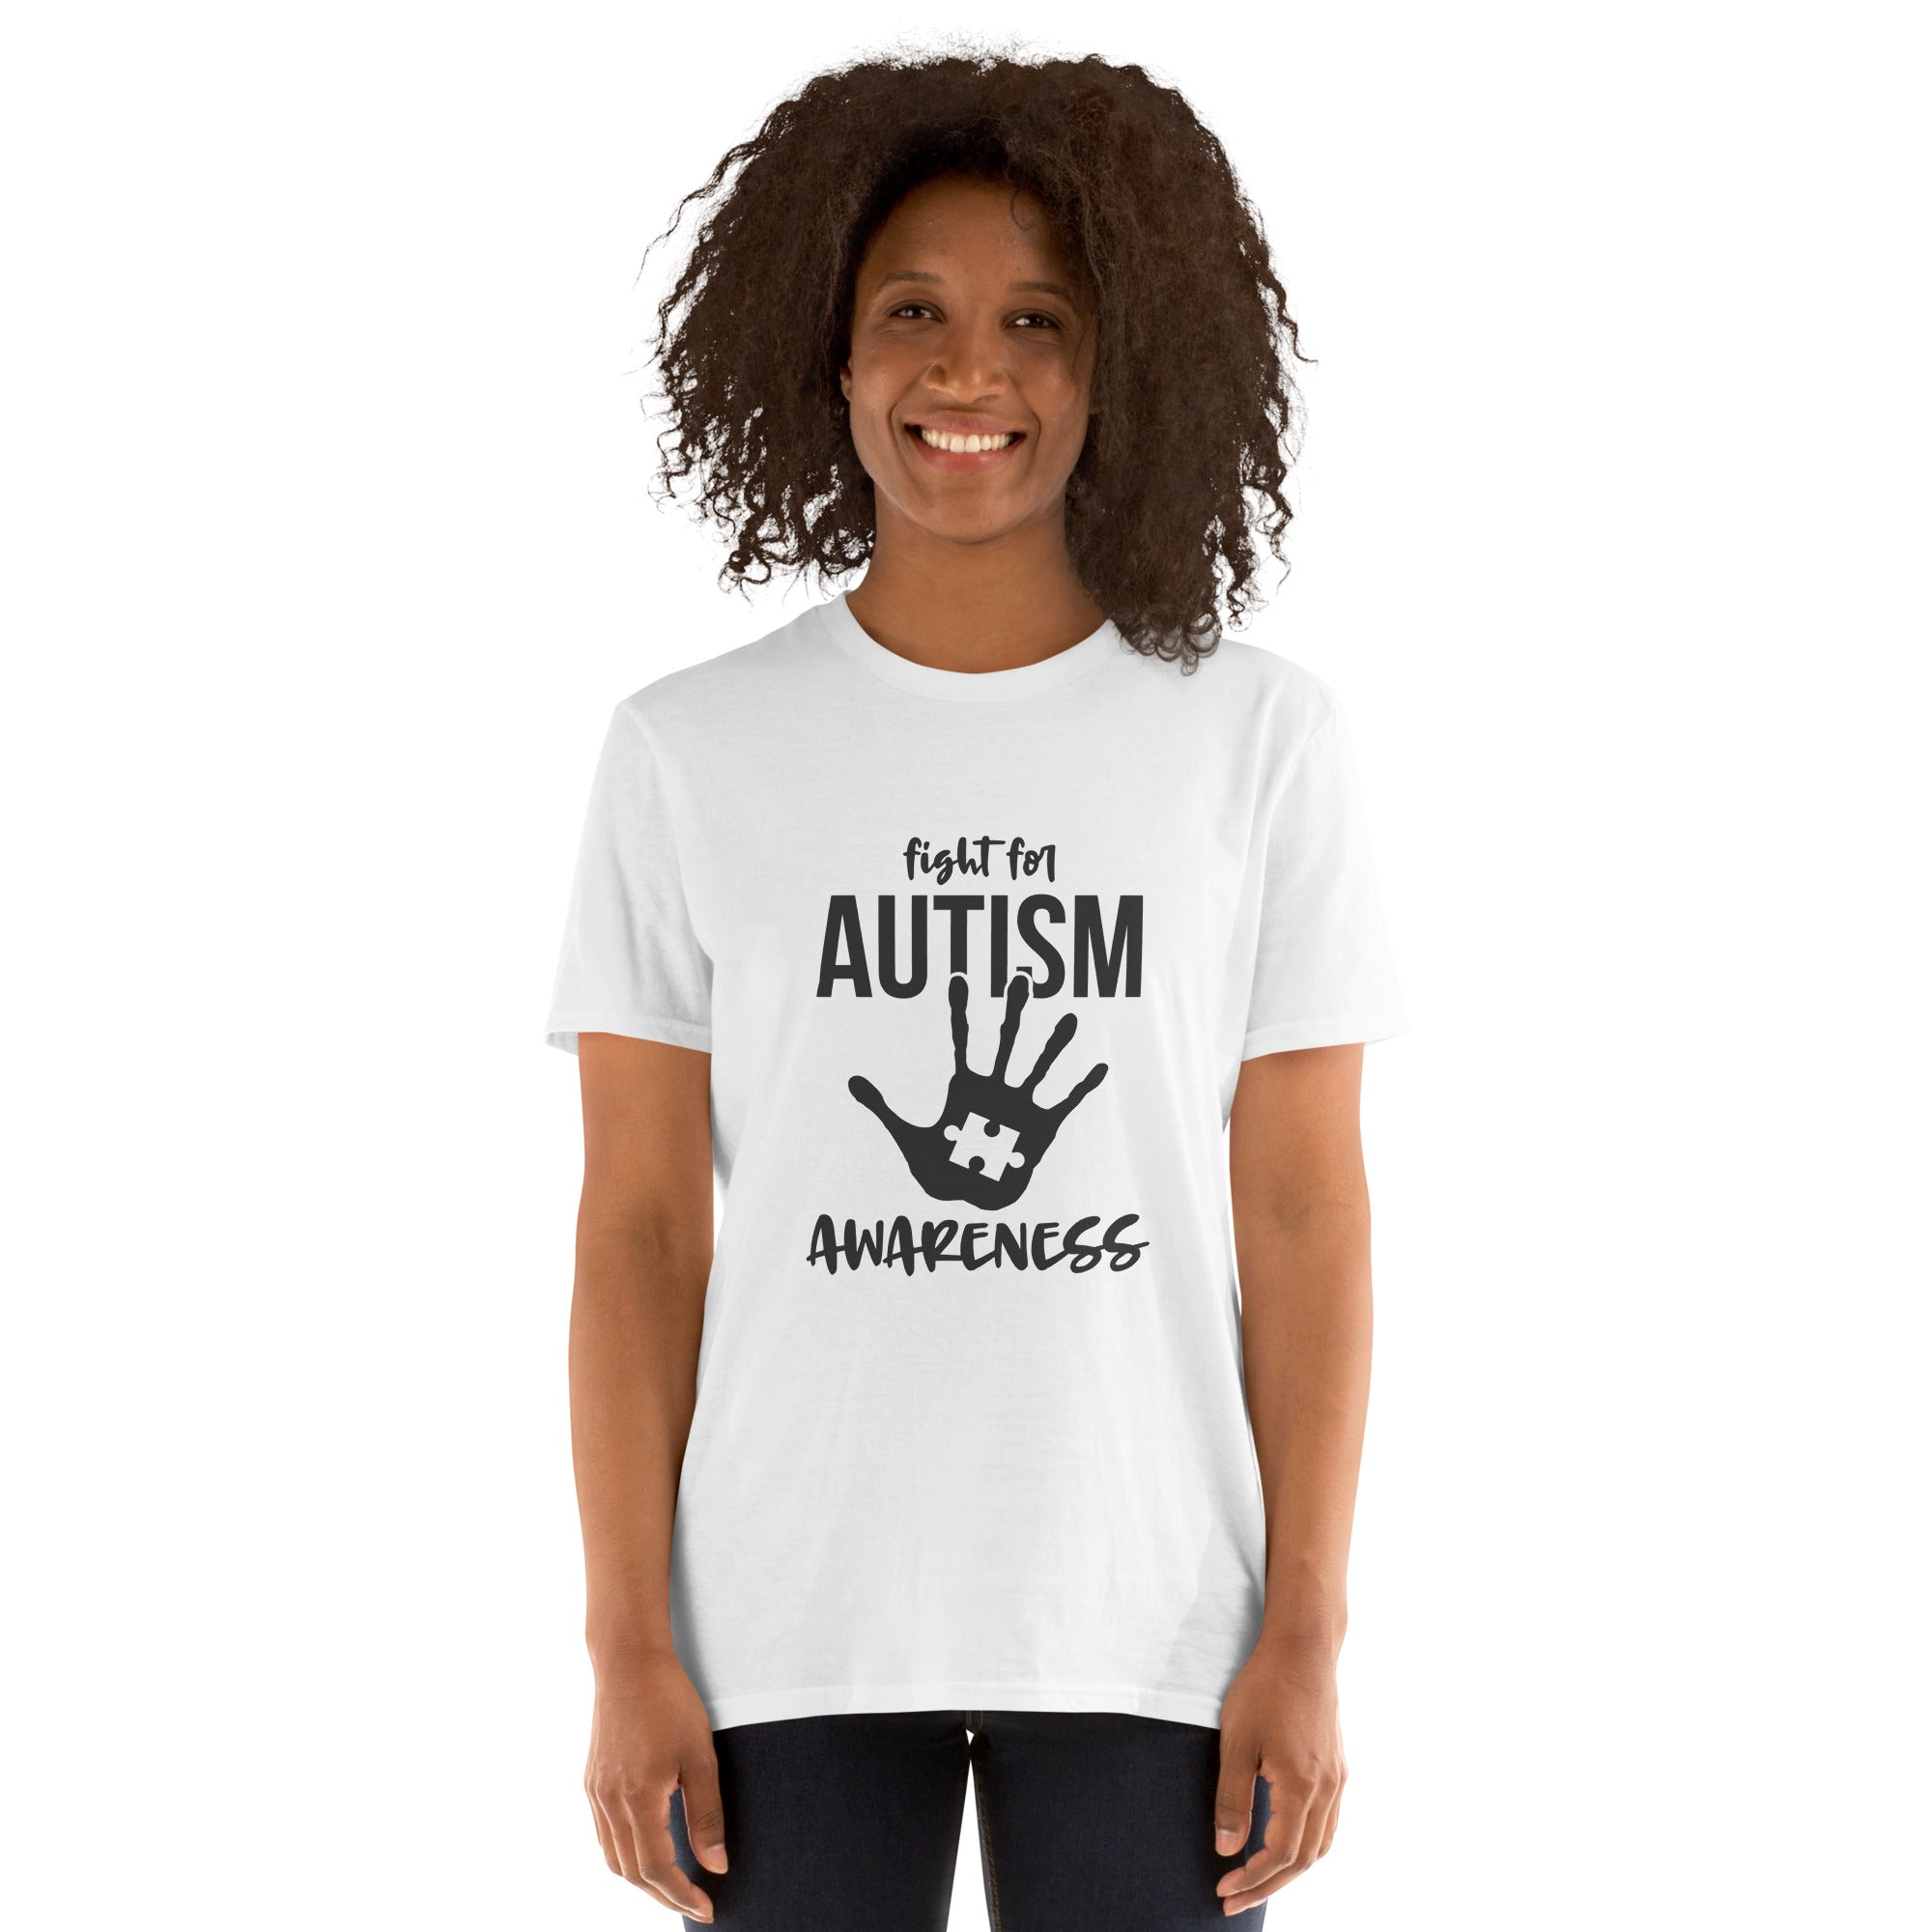 Short-Sleeve Unisex T-Shirt- Fight for autism awareness